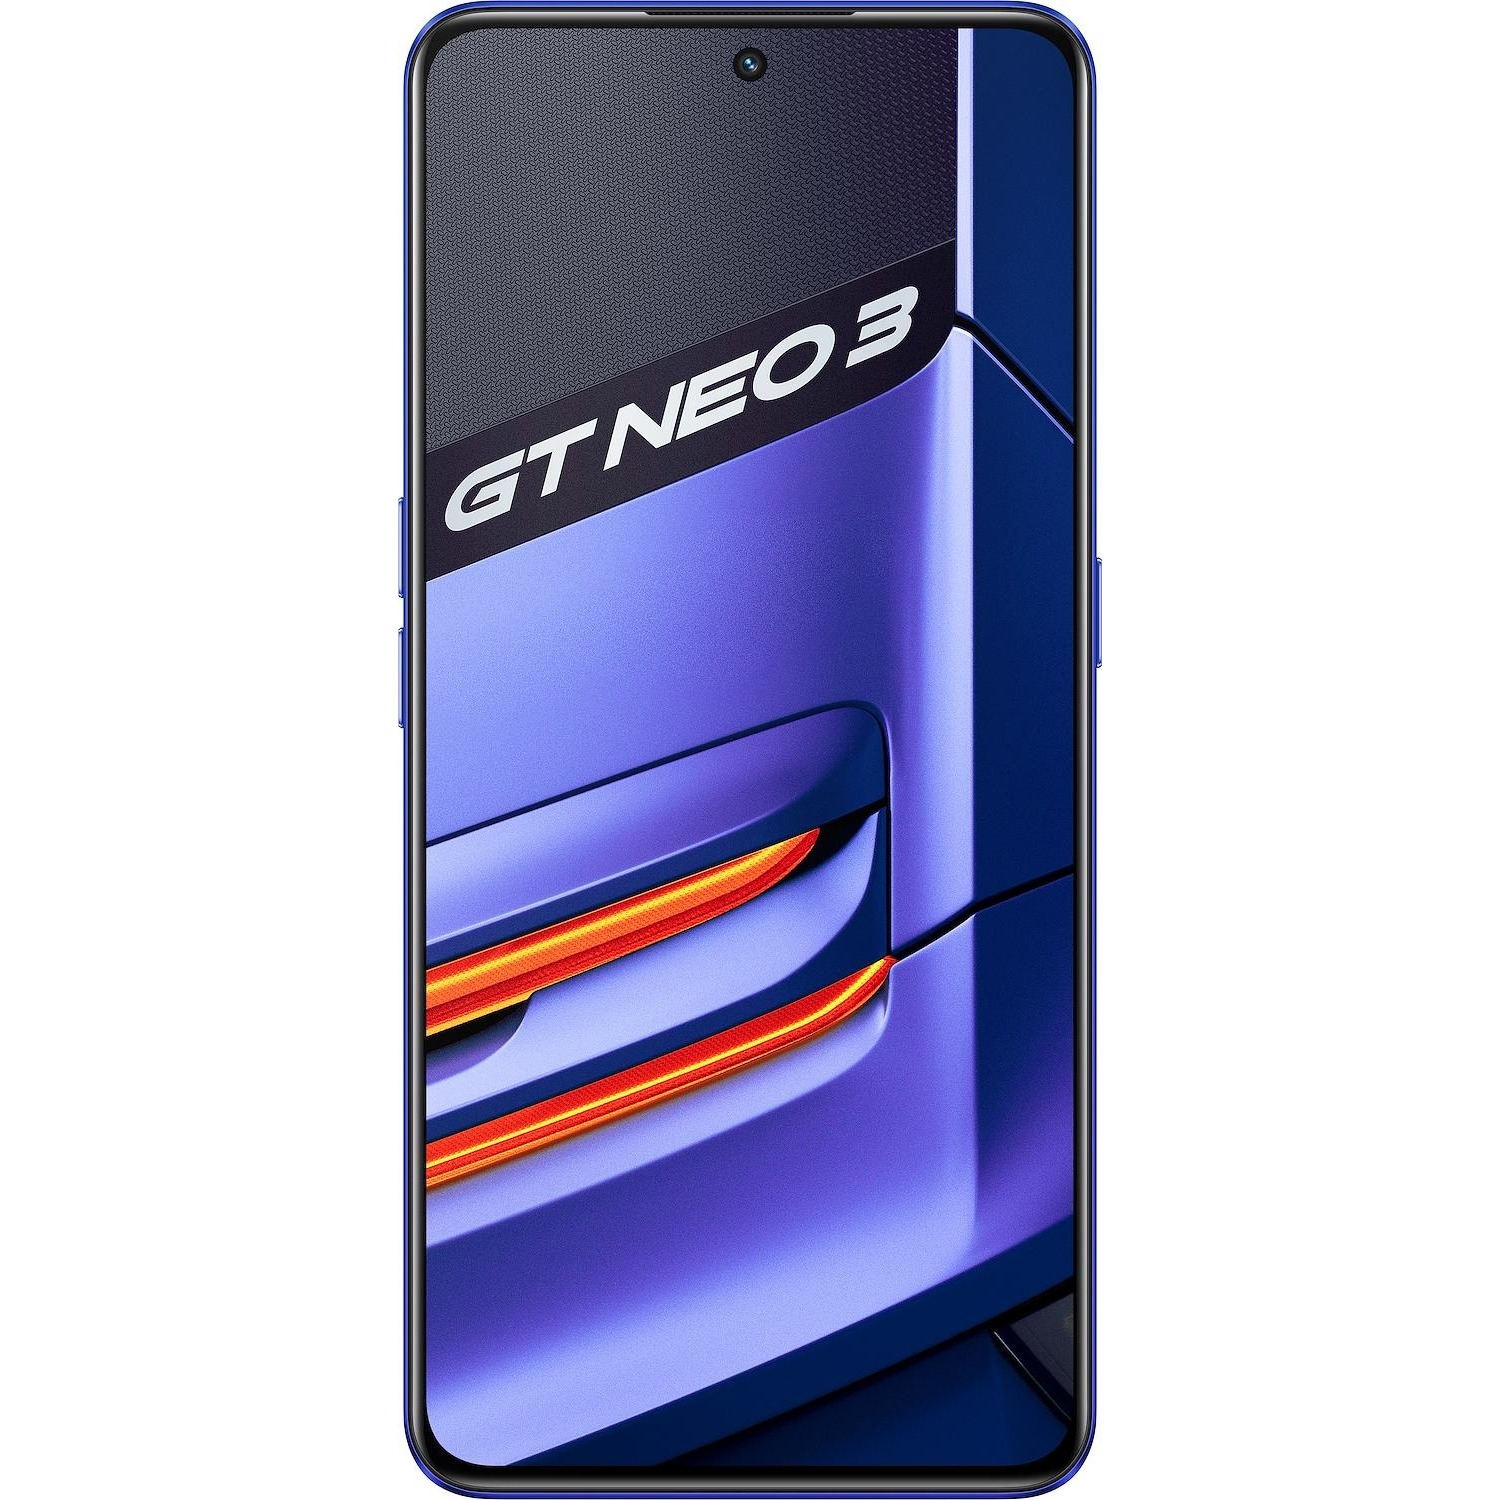 Image of Smartphone Realme GT Neo 3 nitro blue blu